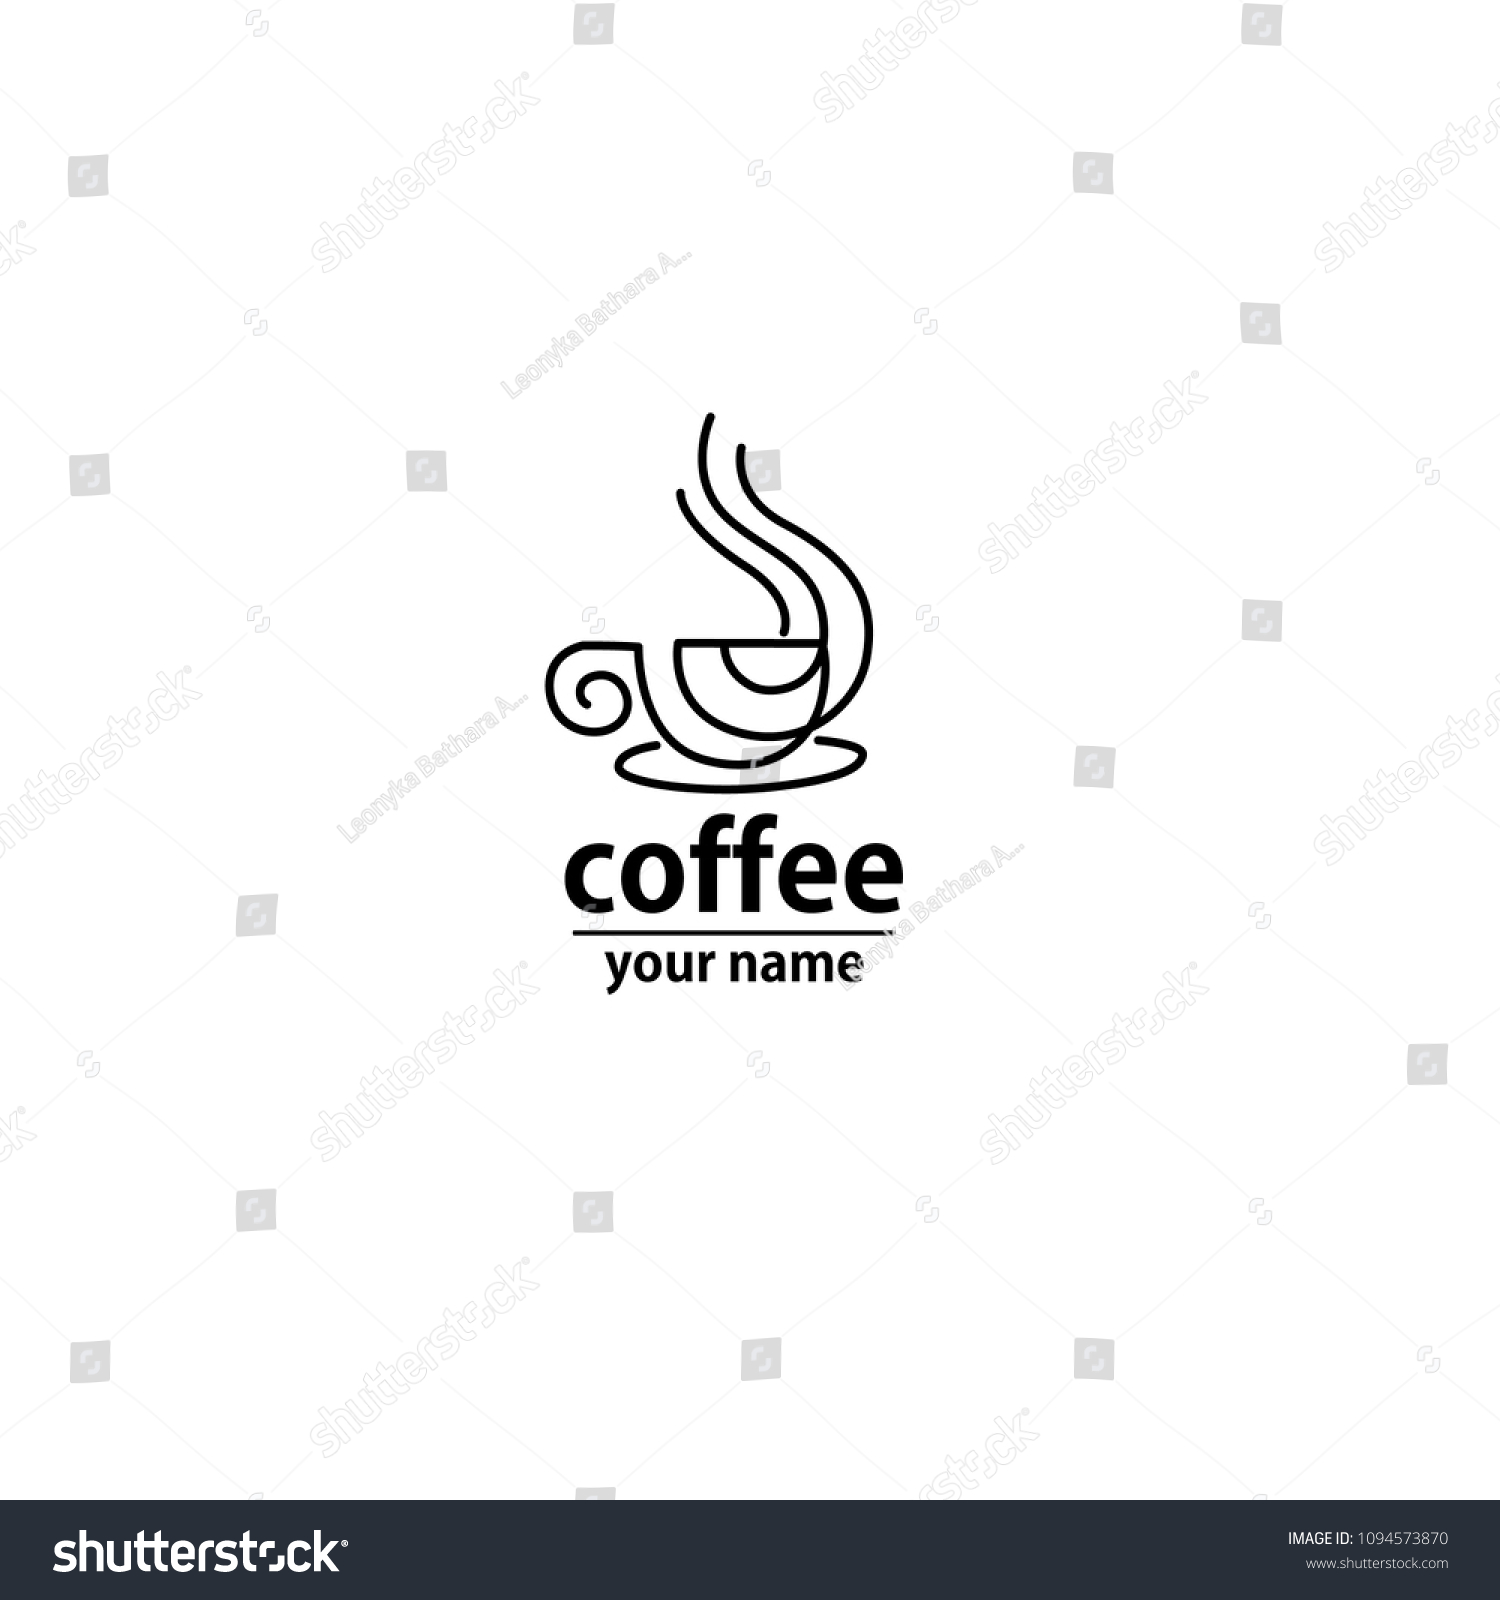 coffee cafe logo #1094573870